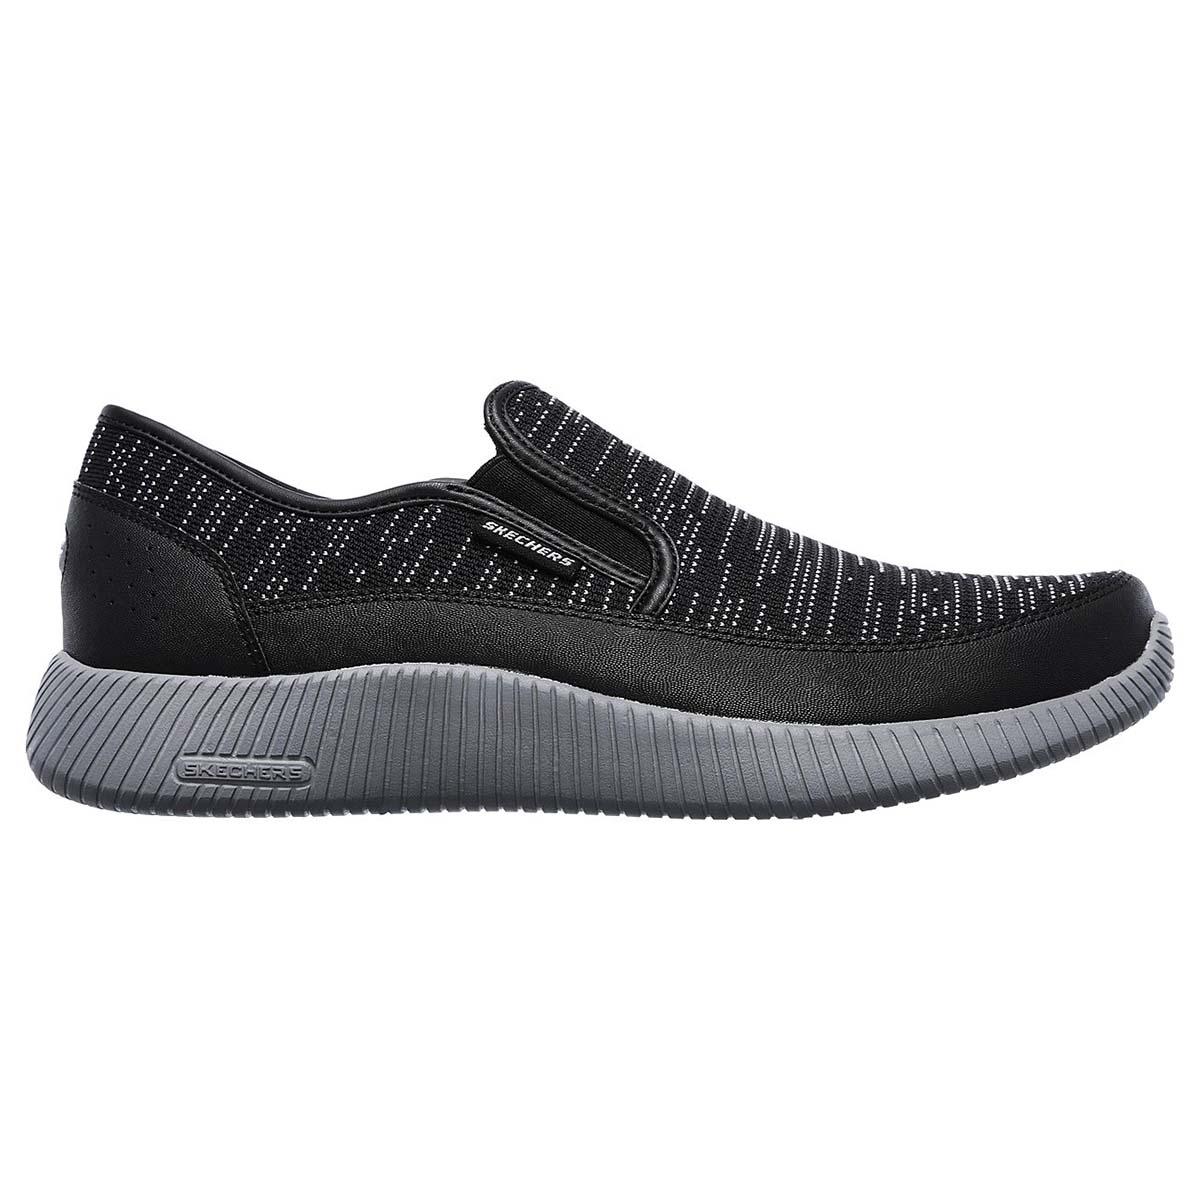 Buy Skechers Air Cooled Memory Foam Mens Shoes (Black/Charcoal) Online